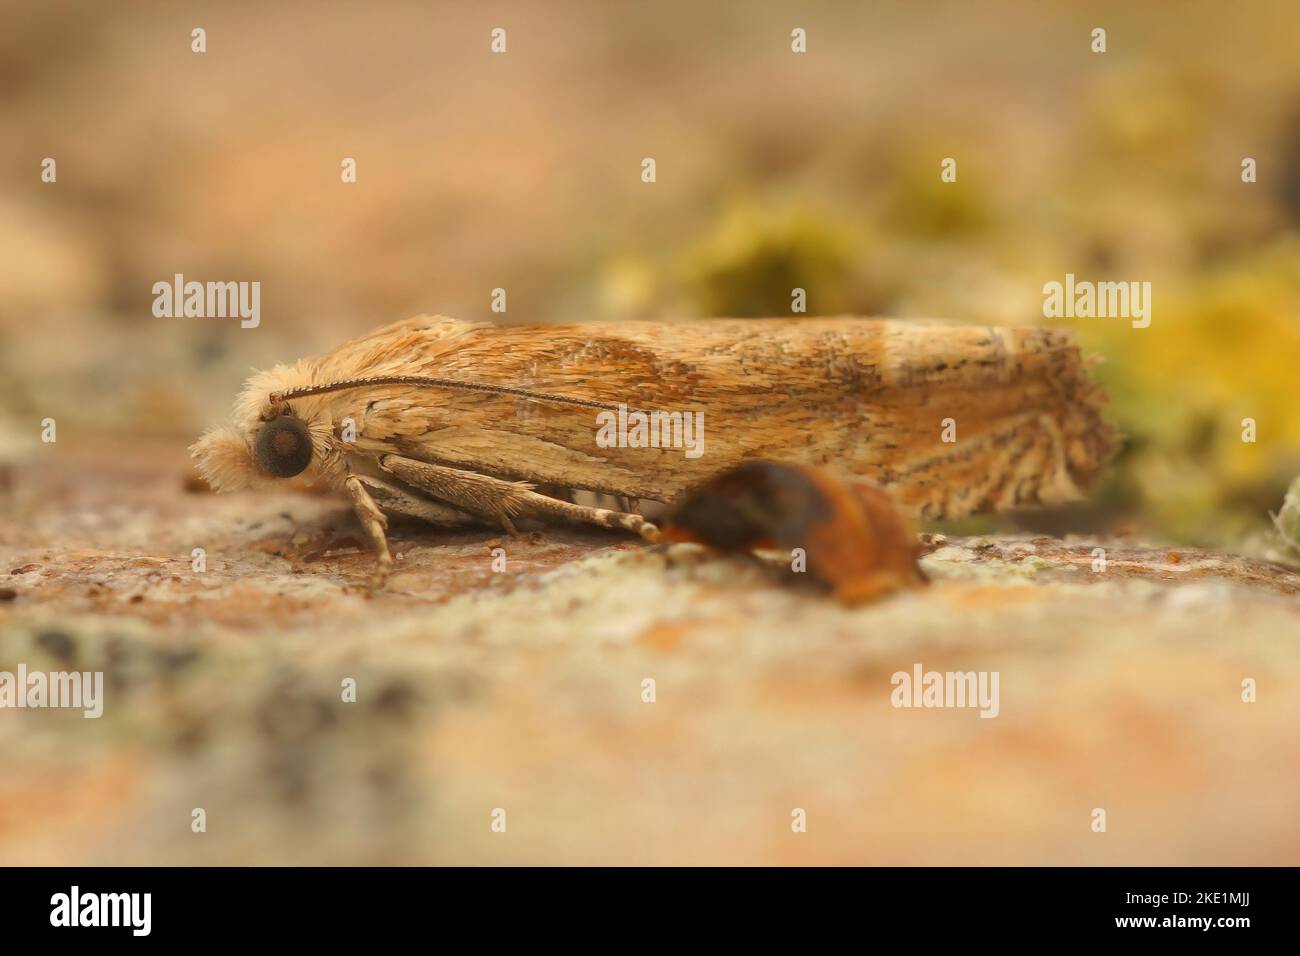 A macro shot of a Eucosma moth on blurred background Stock Photo